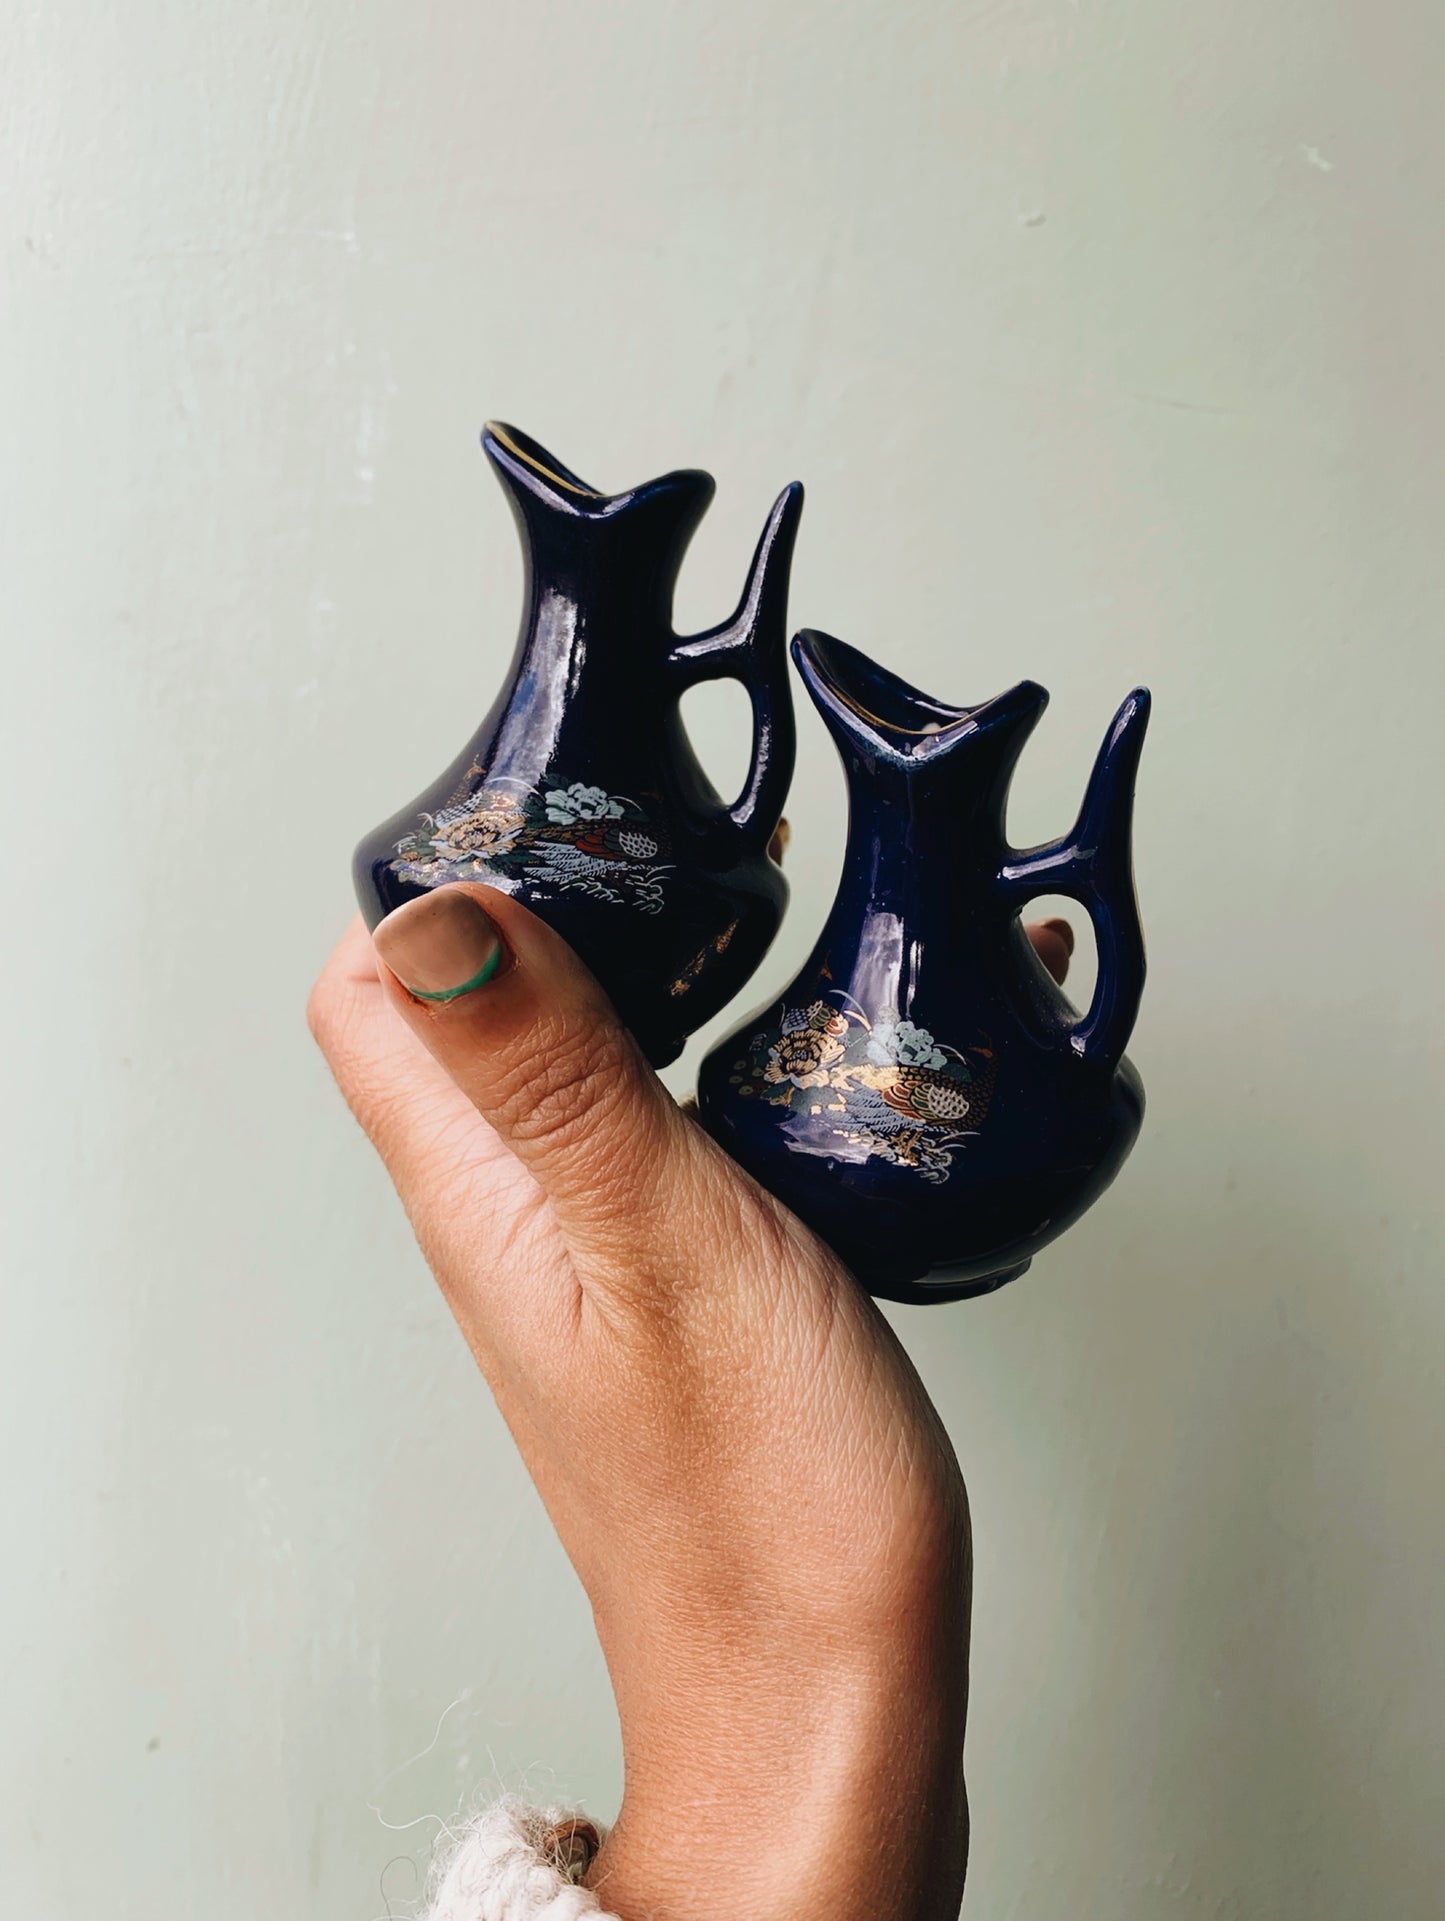 Three Vintage Cobalt Blue Oriental Posy Vases (different narratives)